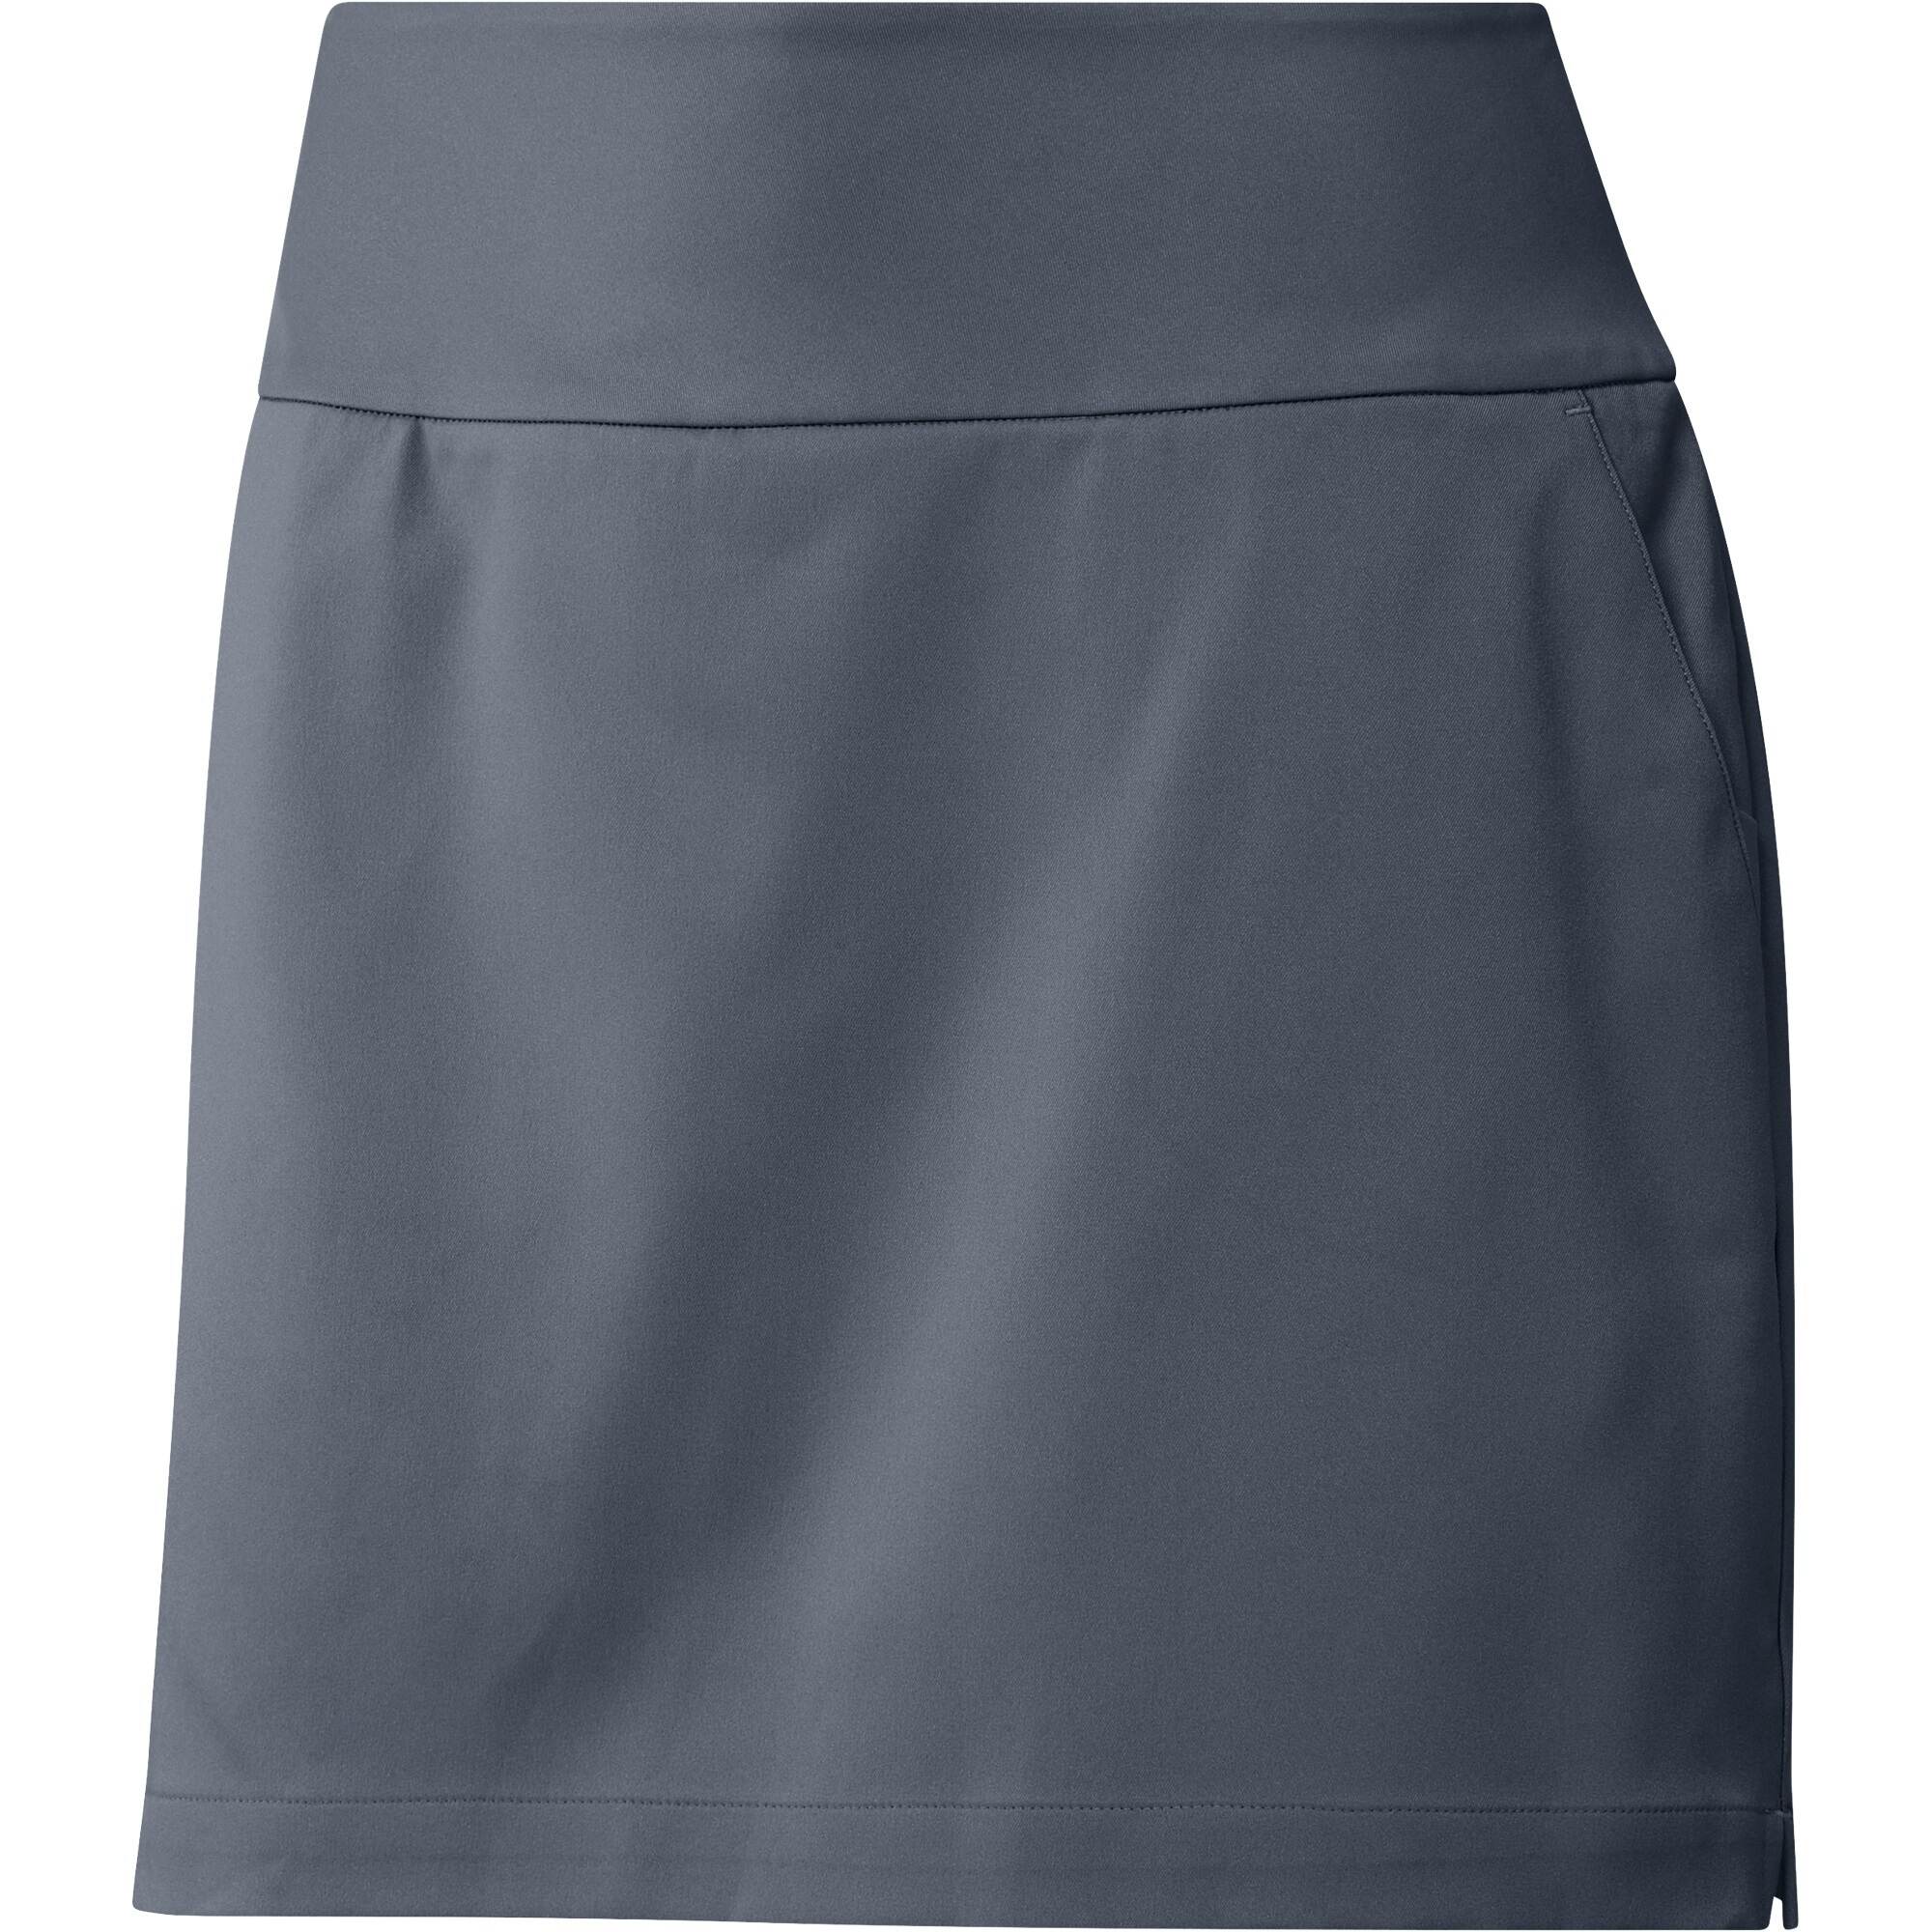 Ladies Golf Skirt Puma Solid PWRShape